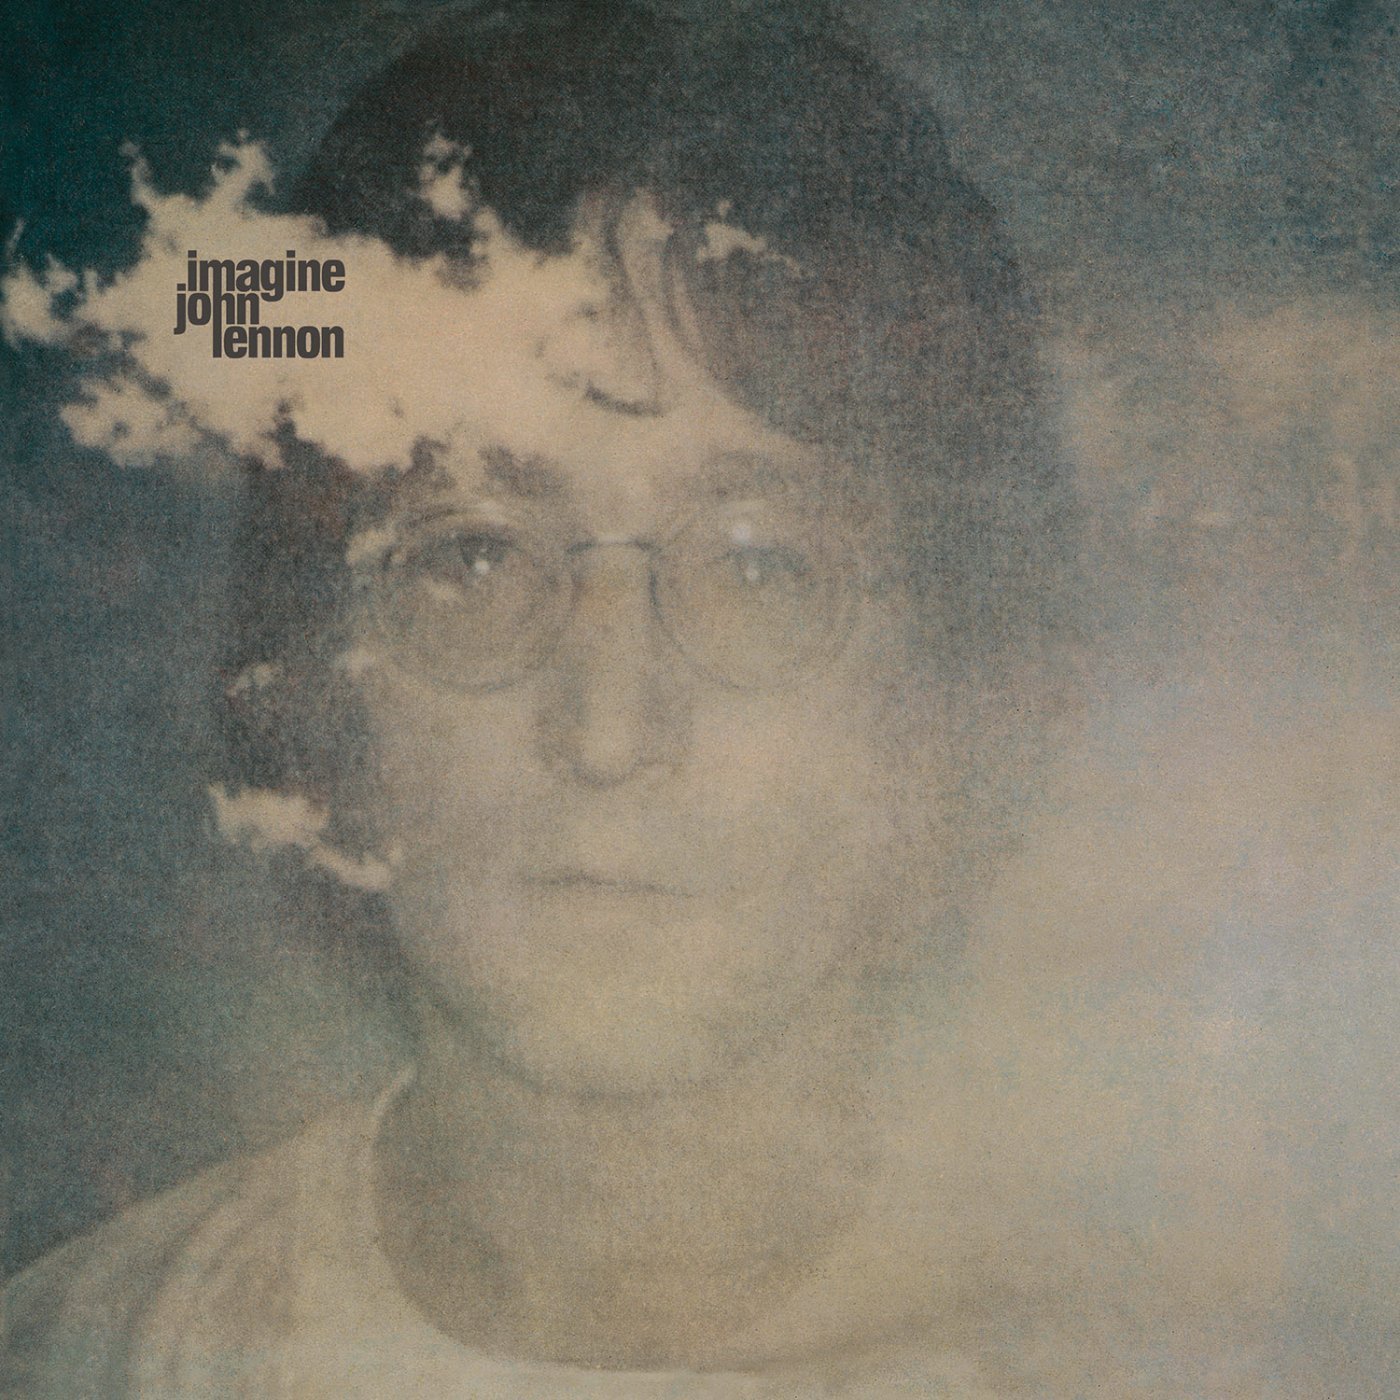 Imagine John Lennon - Vinyle LP 33 tours [SORTIE]